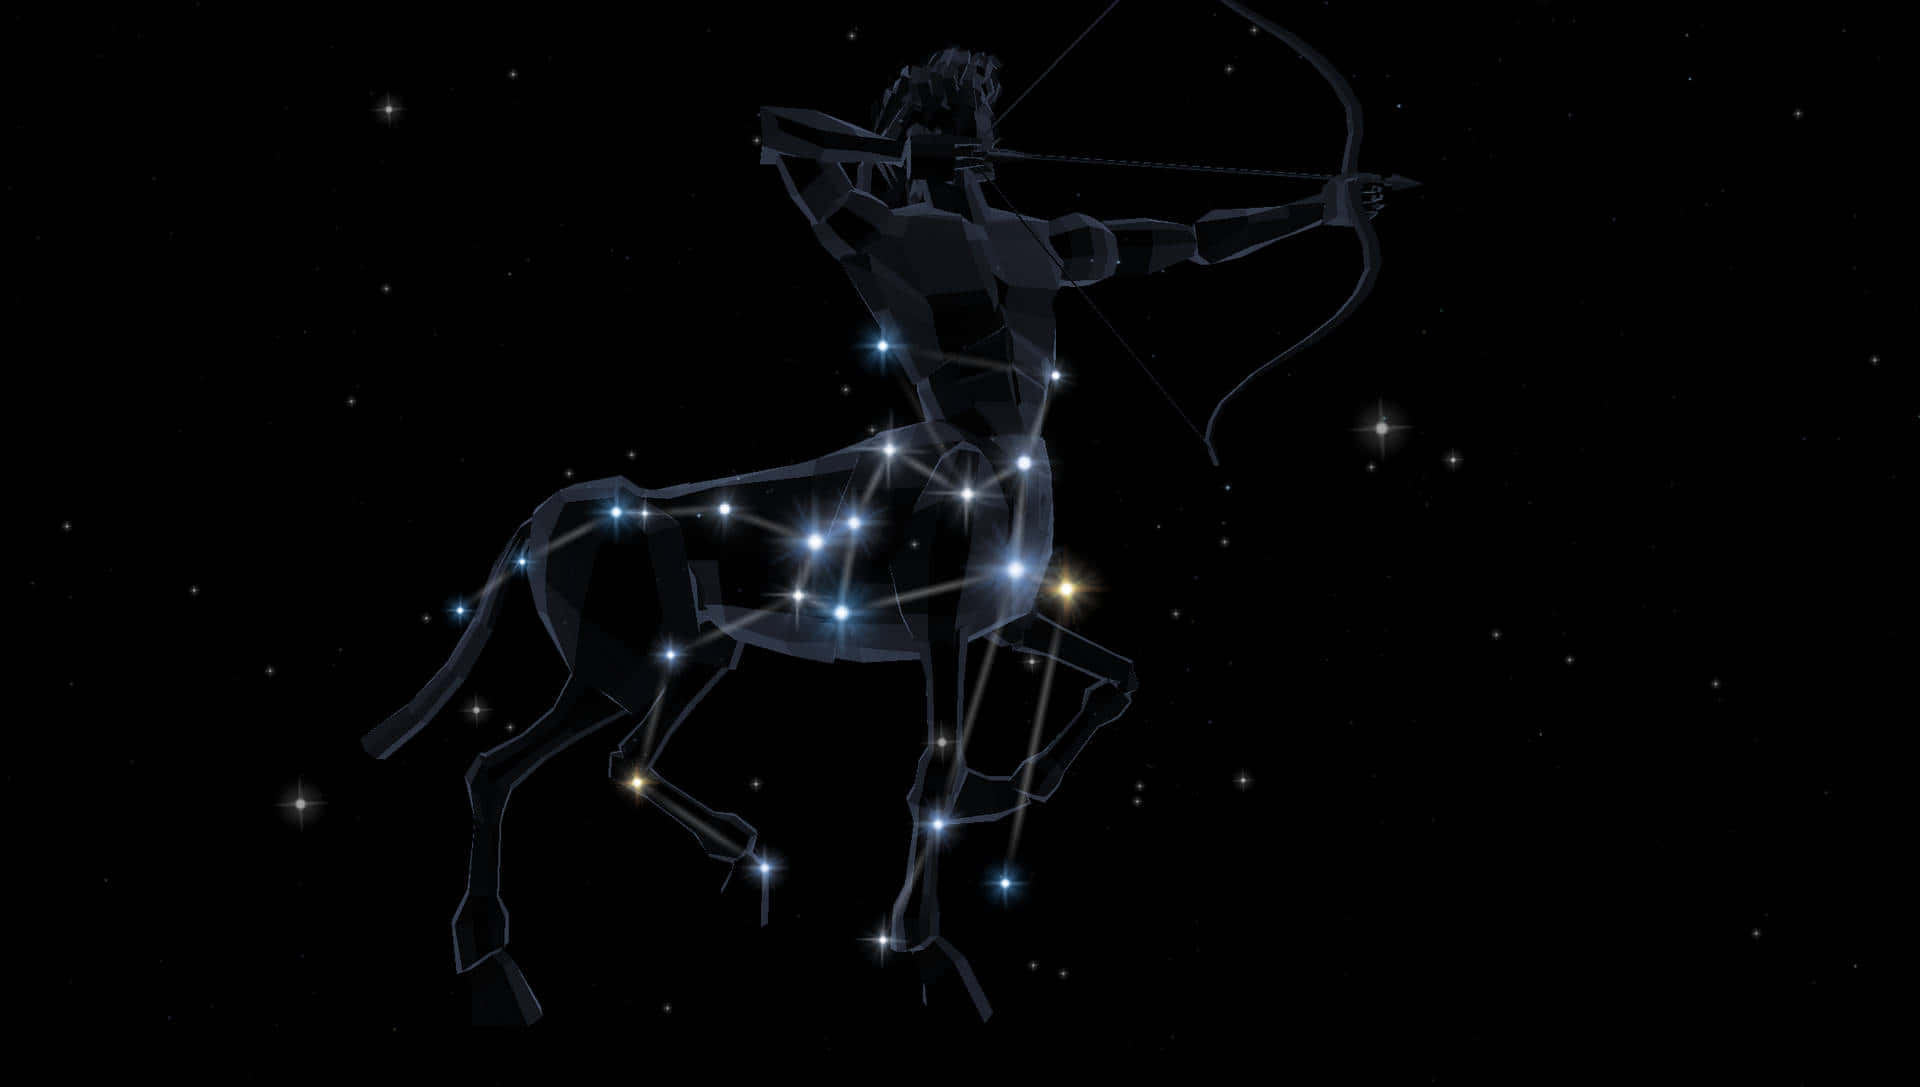 Majestic Sagittarius Constellation in the Night Sky